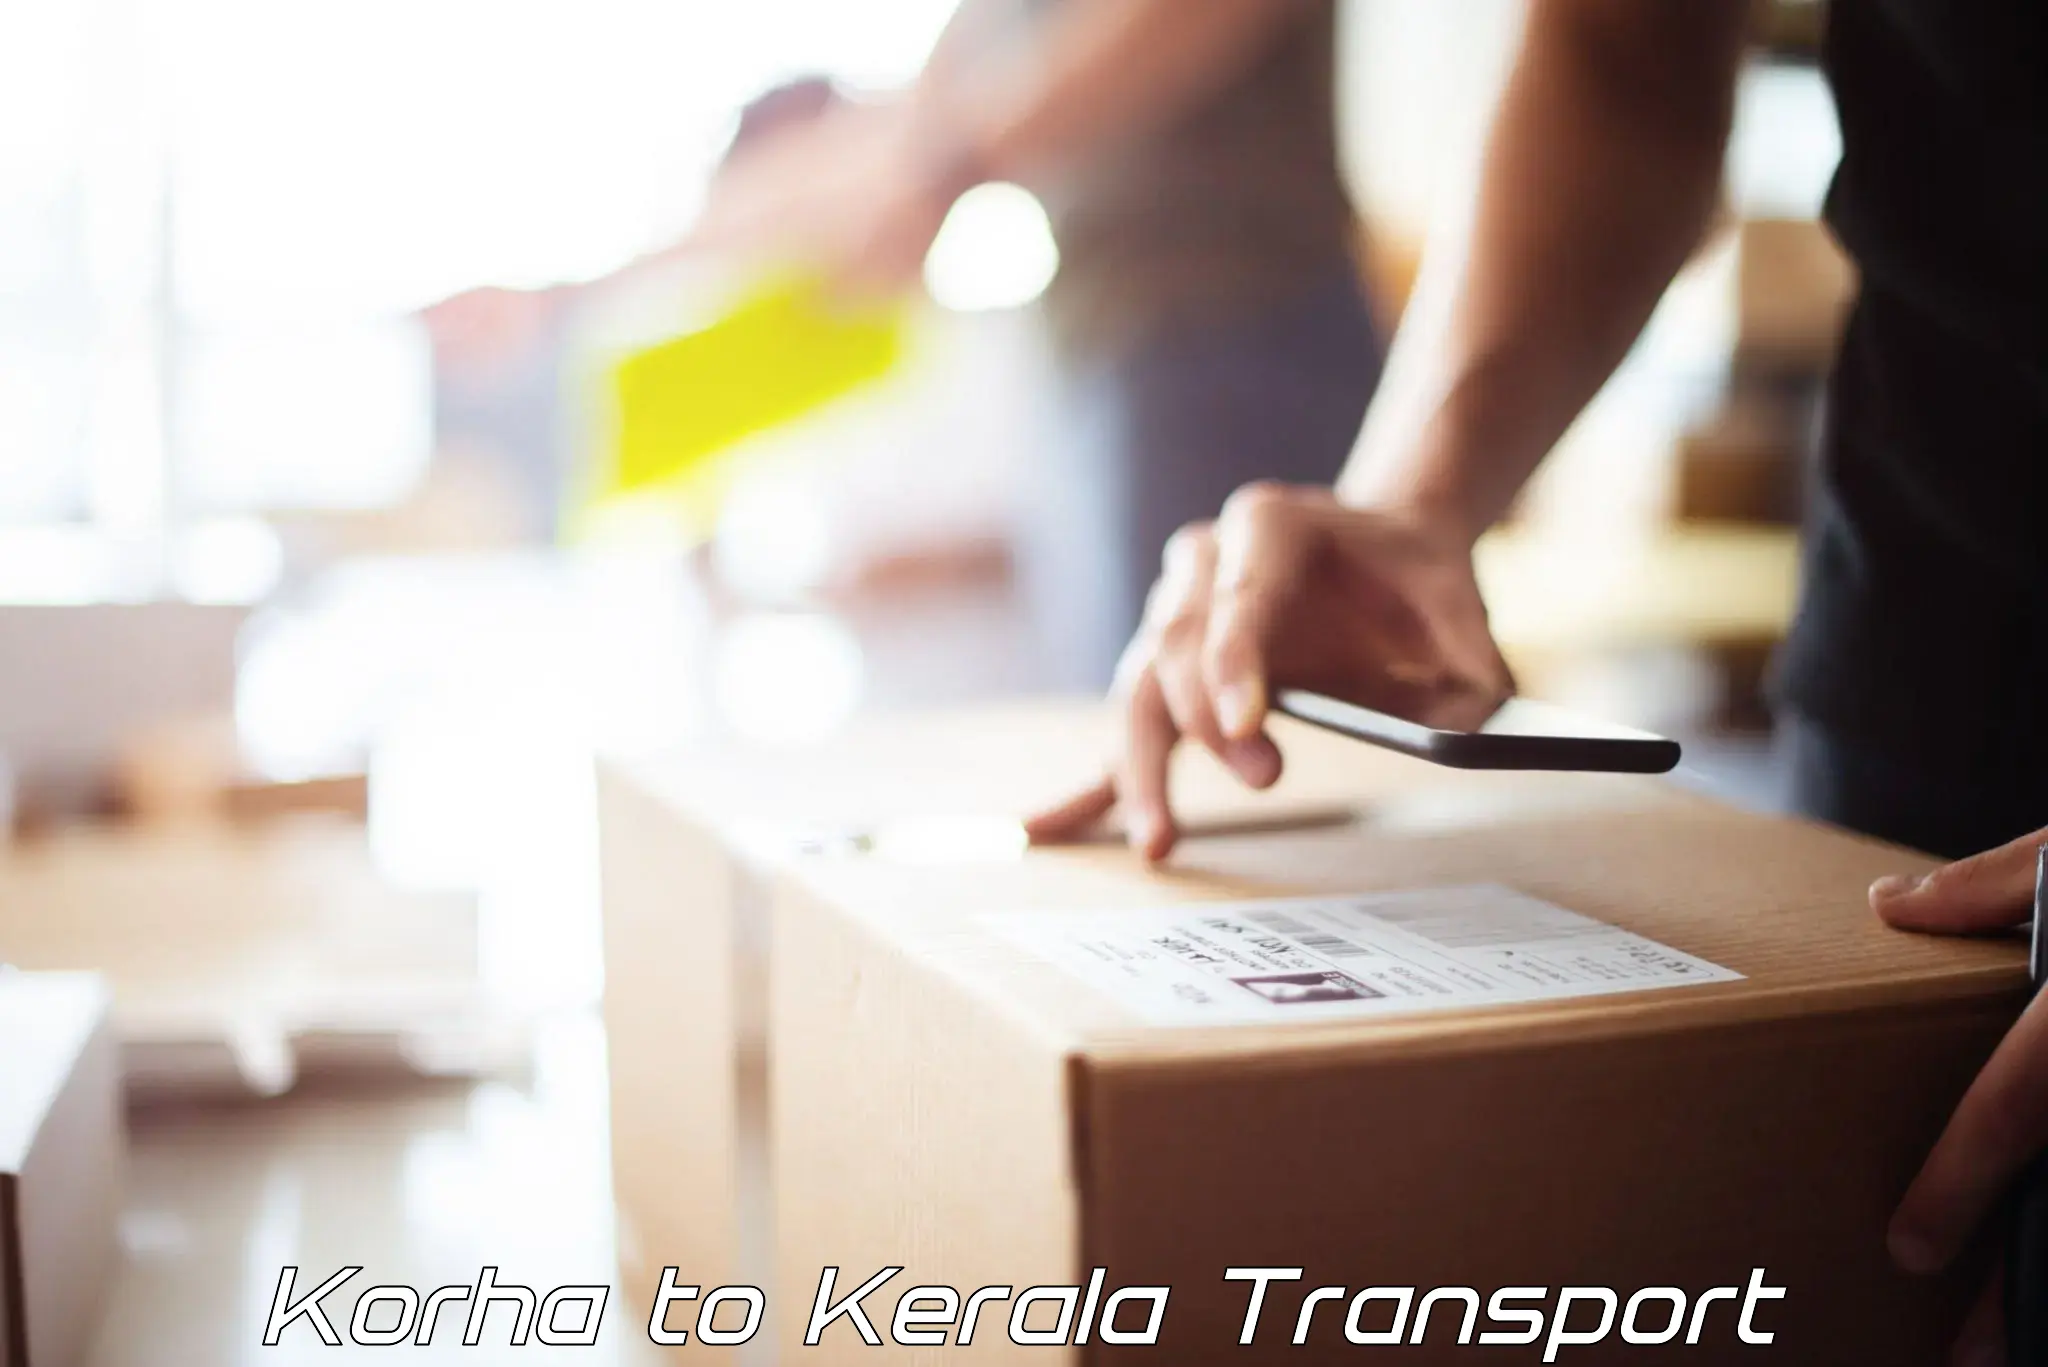 Daily transport service Korha to Kozhikode